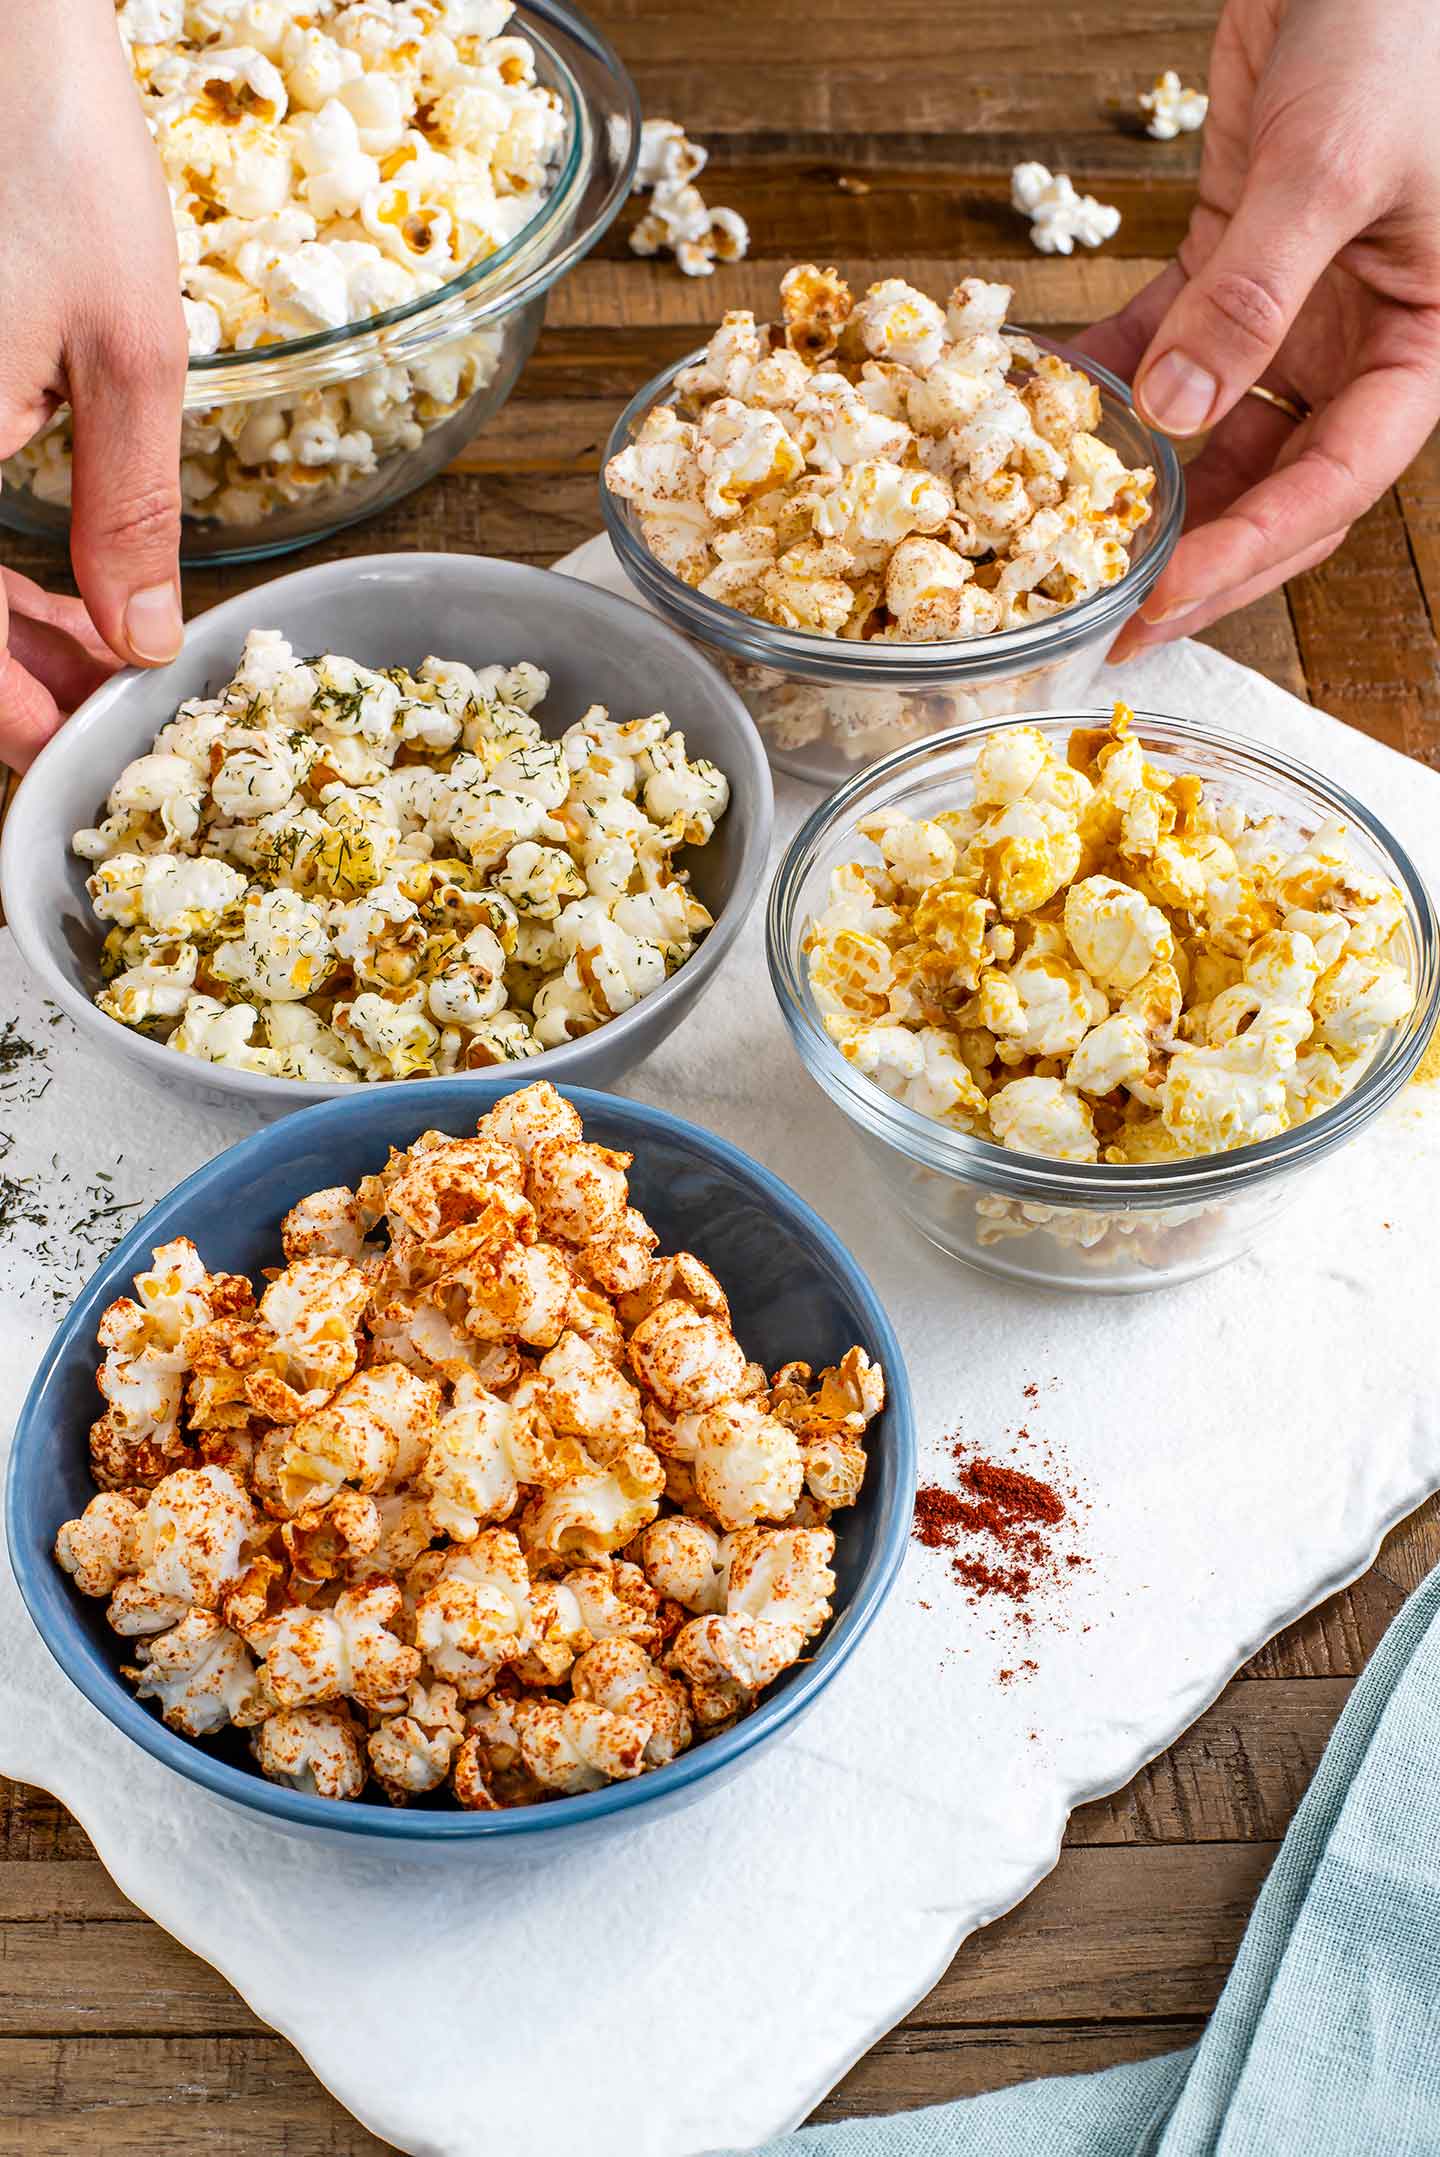 Popcorn Gift Set with Homemade Popcorn Seasonings